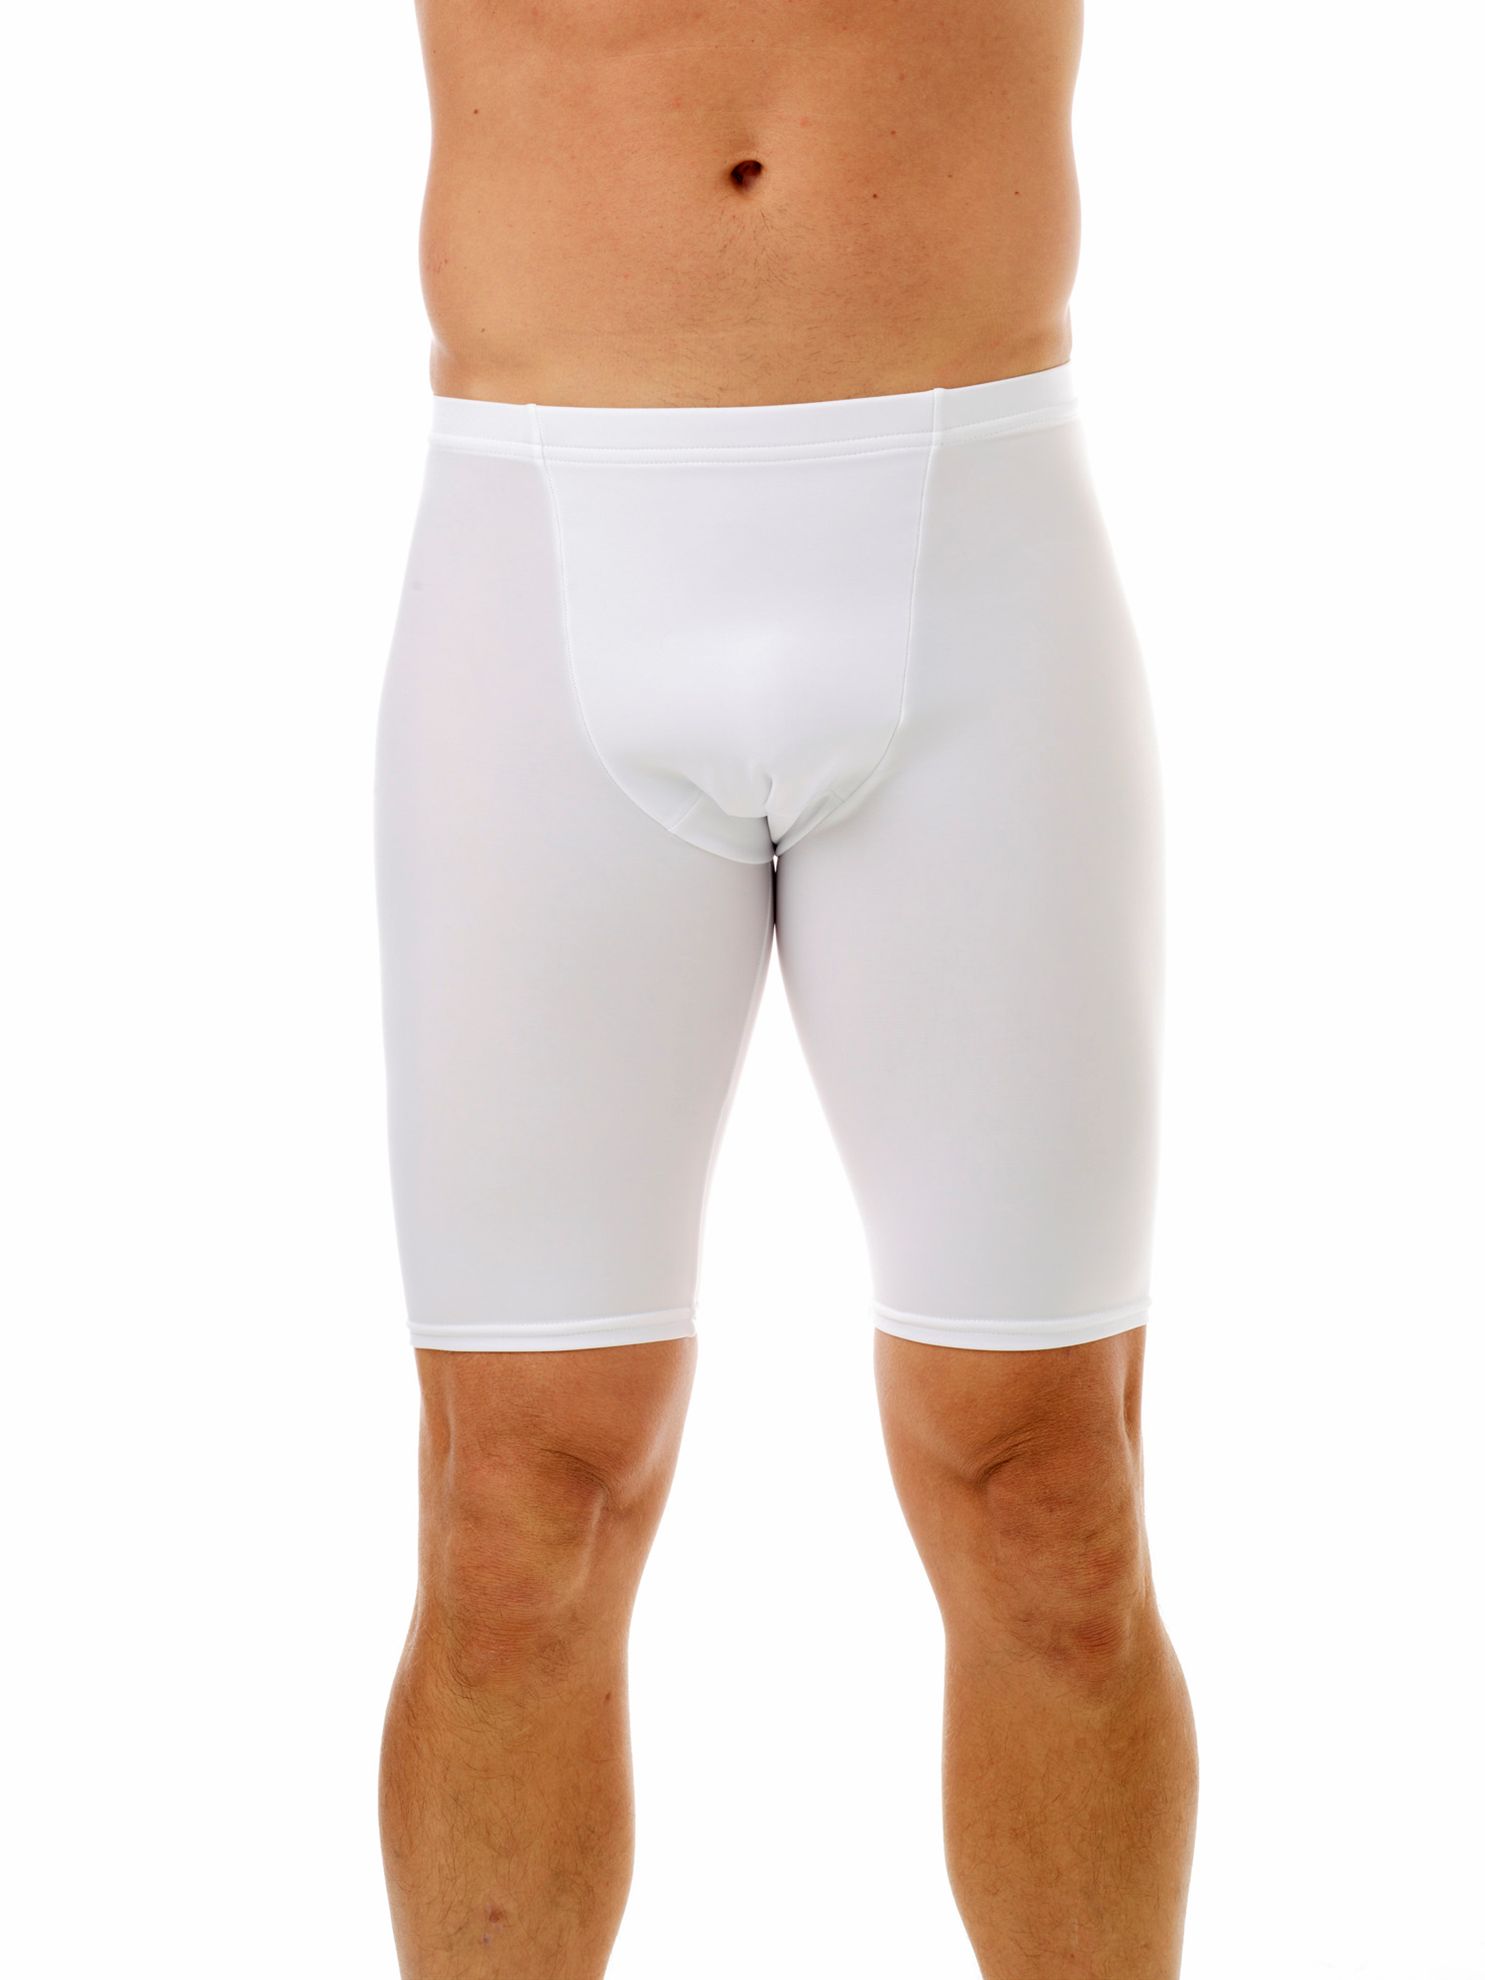 Underworks Mens Microfiber Performance Compression Pants - White - XS